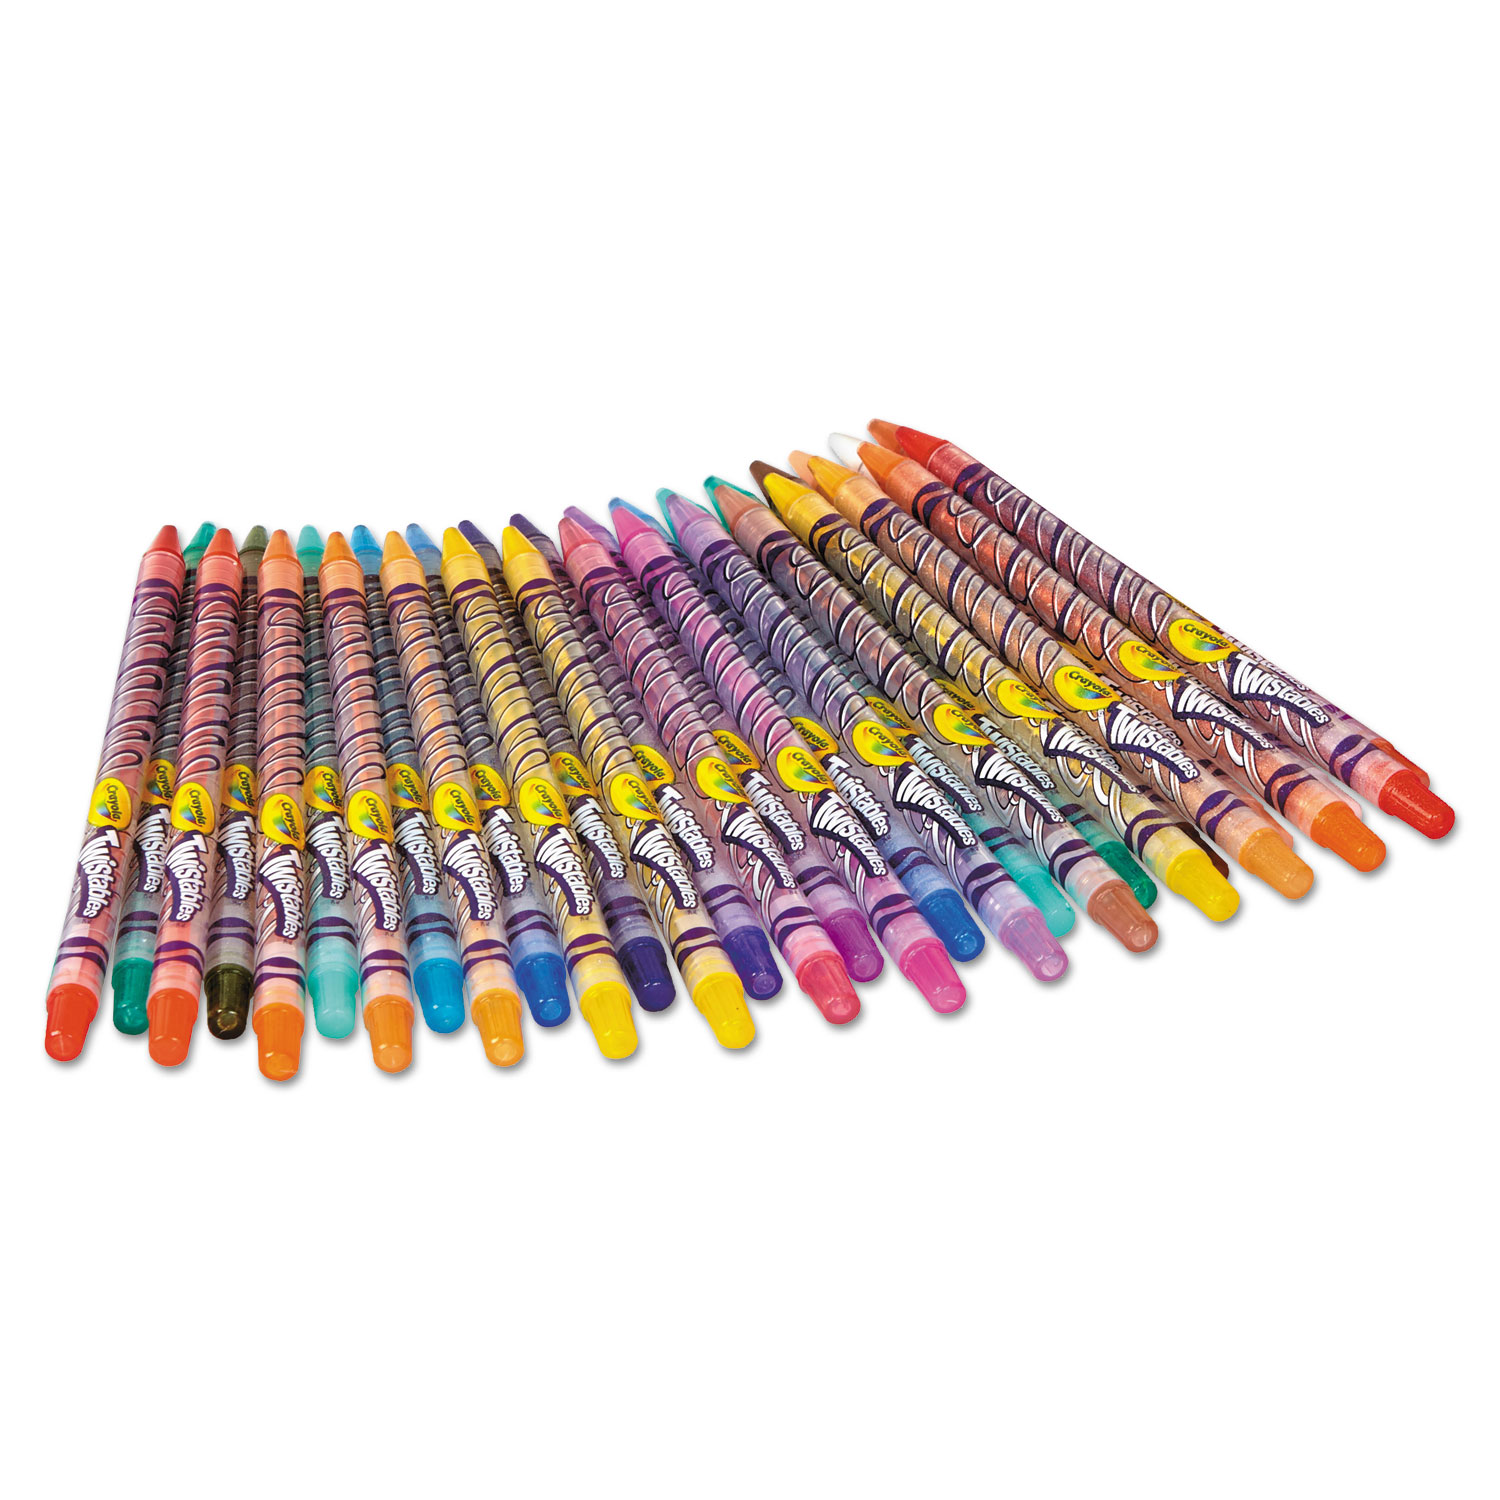 Twistables Mini Crayons, 24 Colors/pack | Bundle of 2 Packs